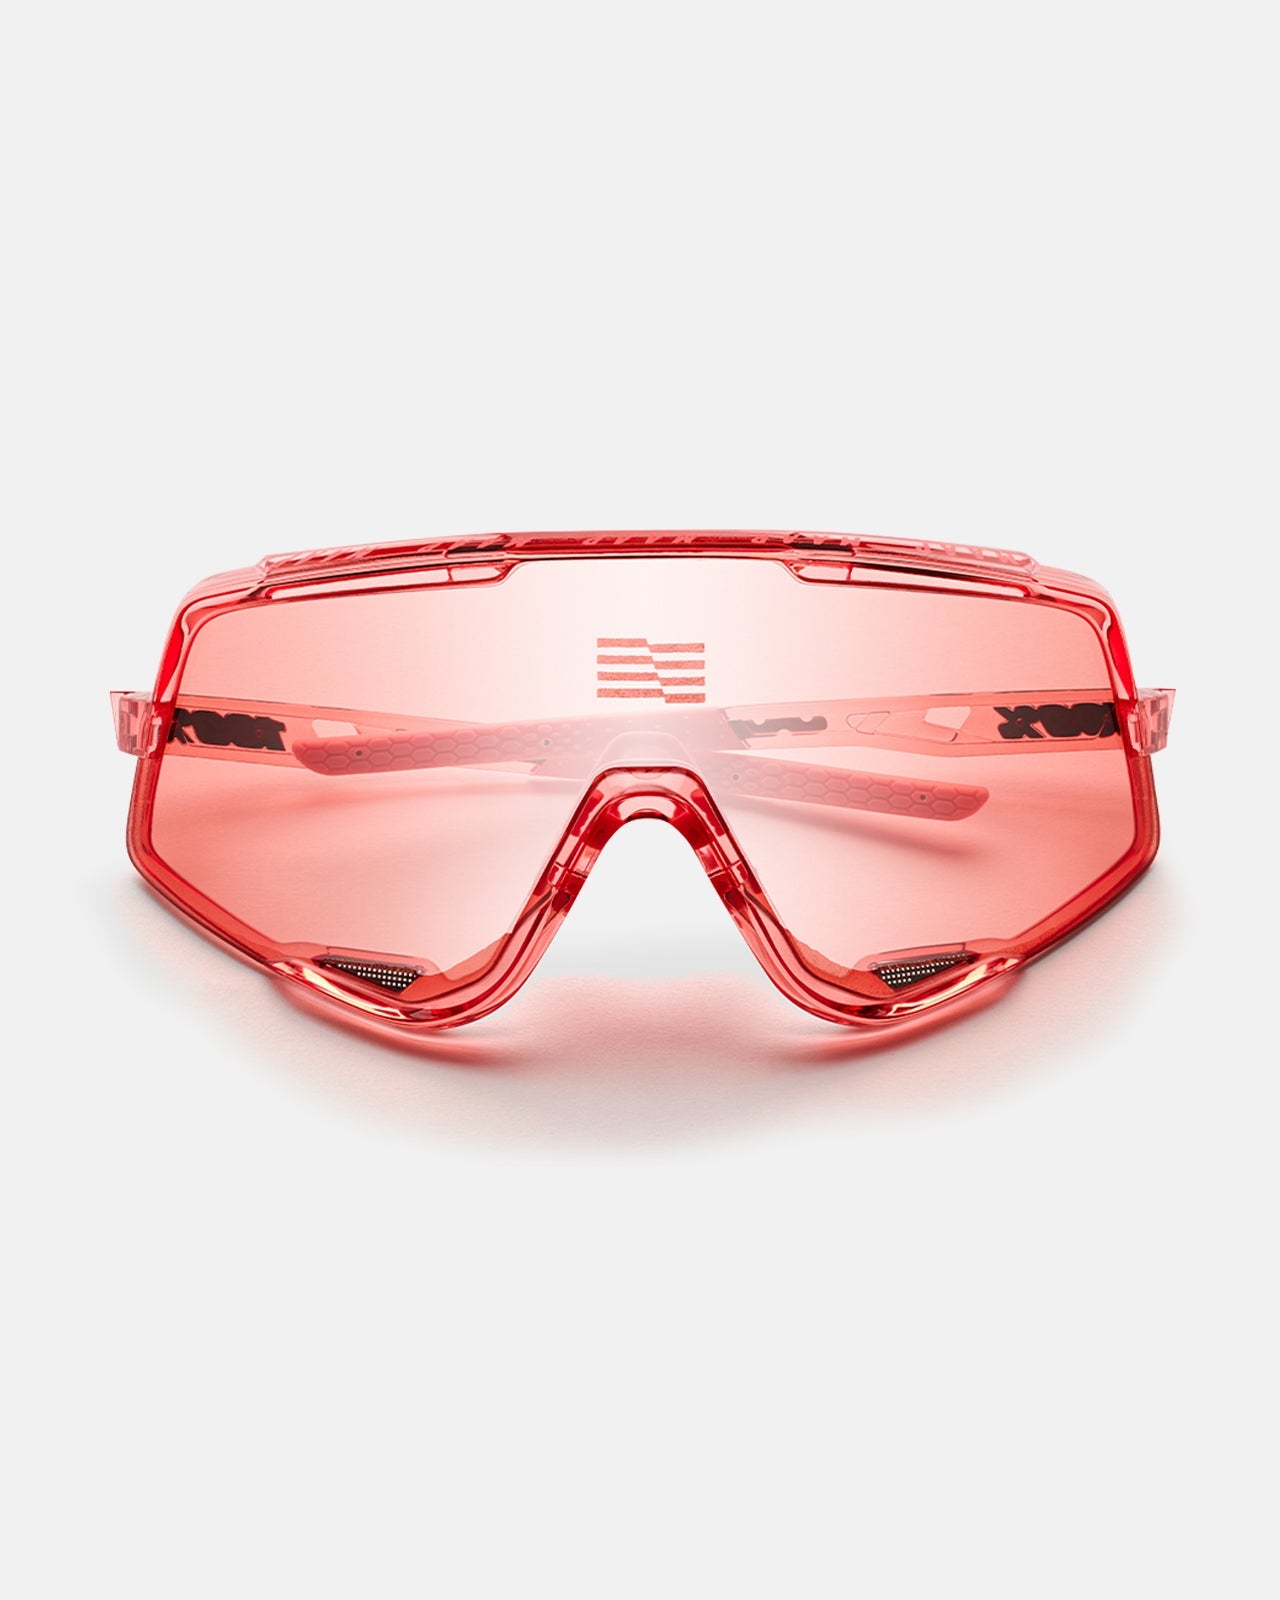 x 100% Glendale Sunglasses - Light Coral